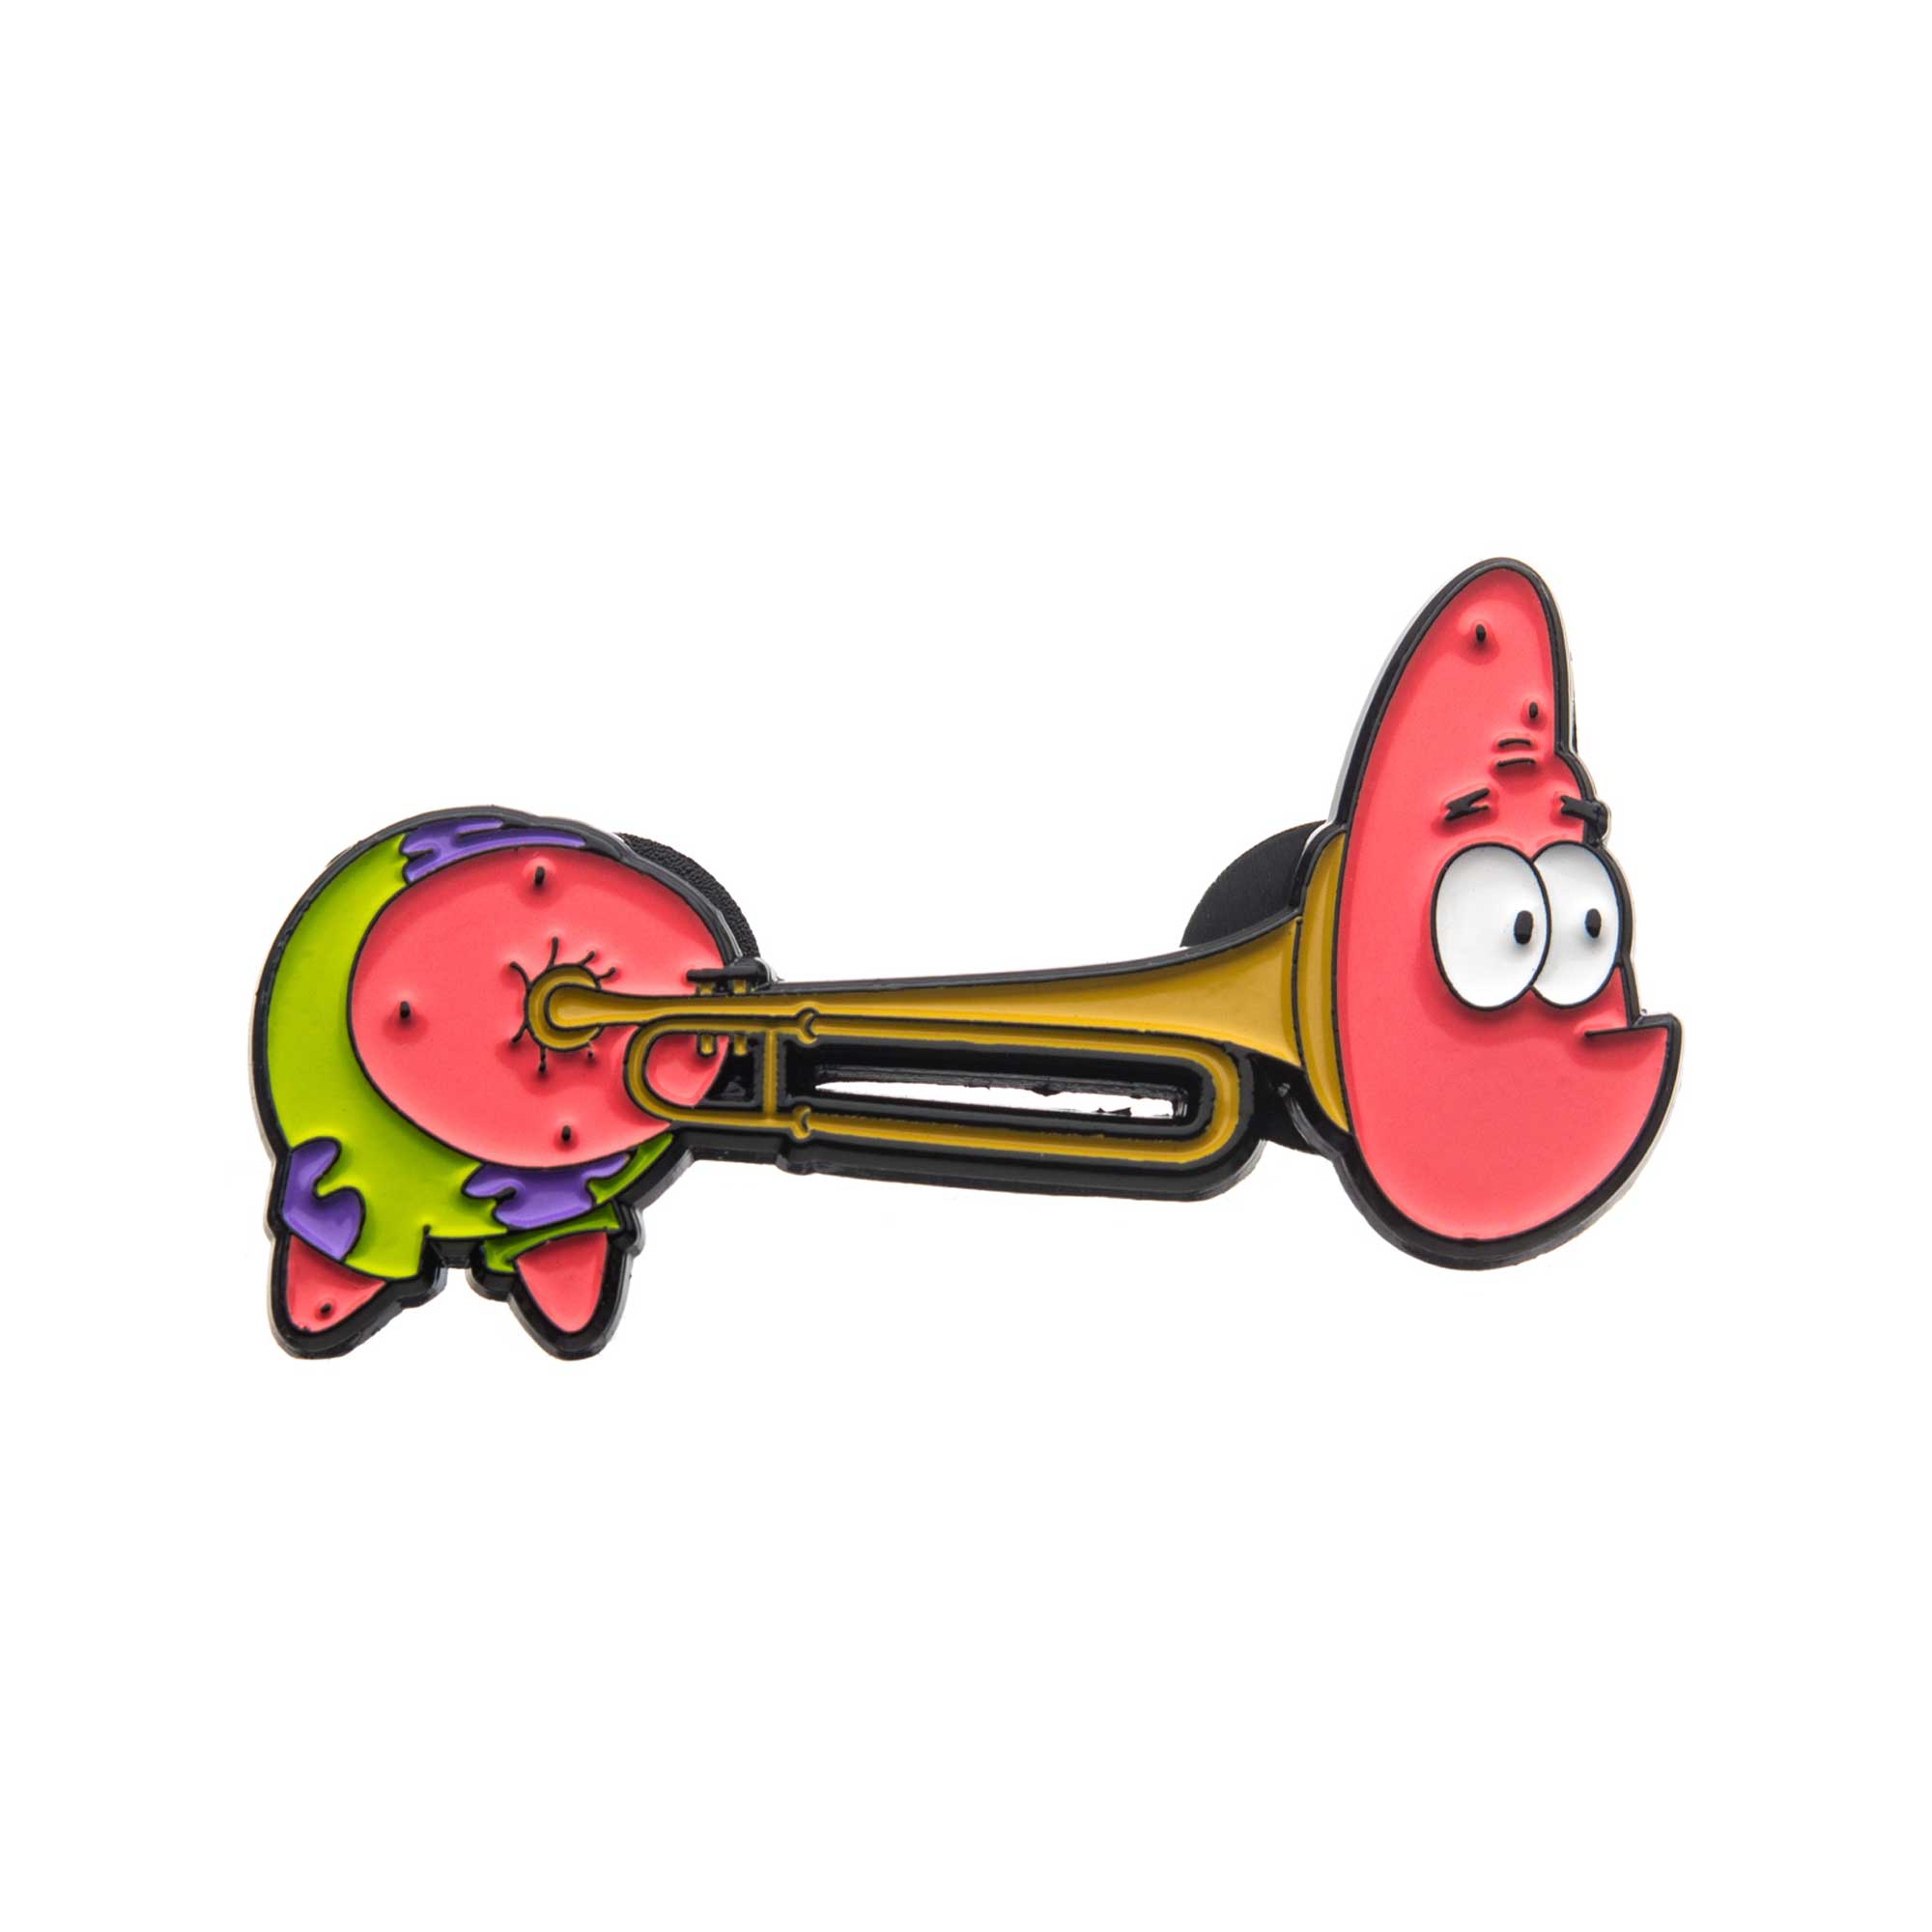 Nickelodeon Patrick Inside the Trombone Lapel Pin [COMING SOON]